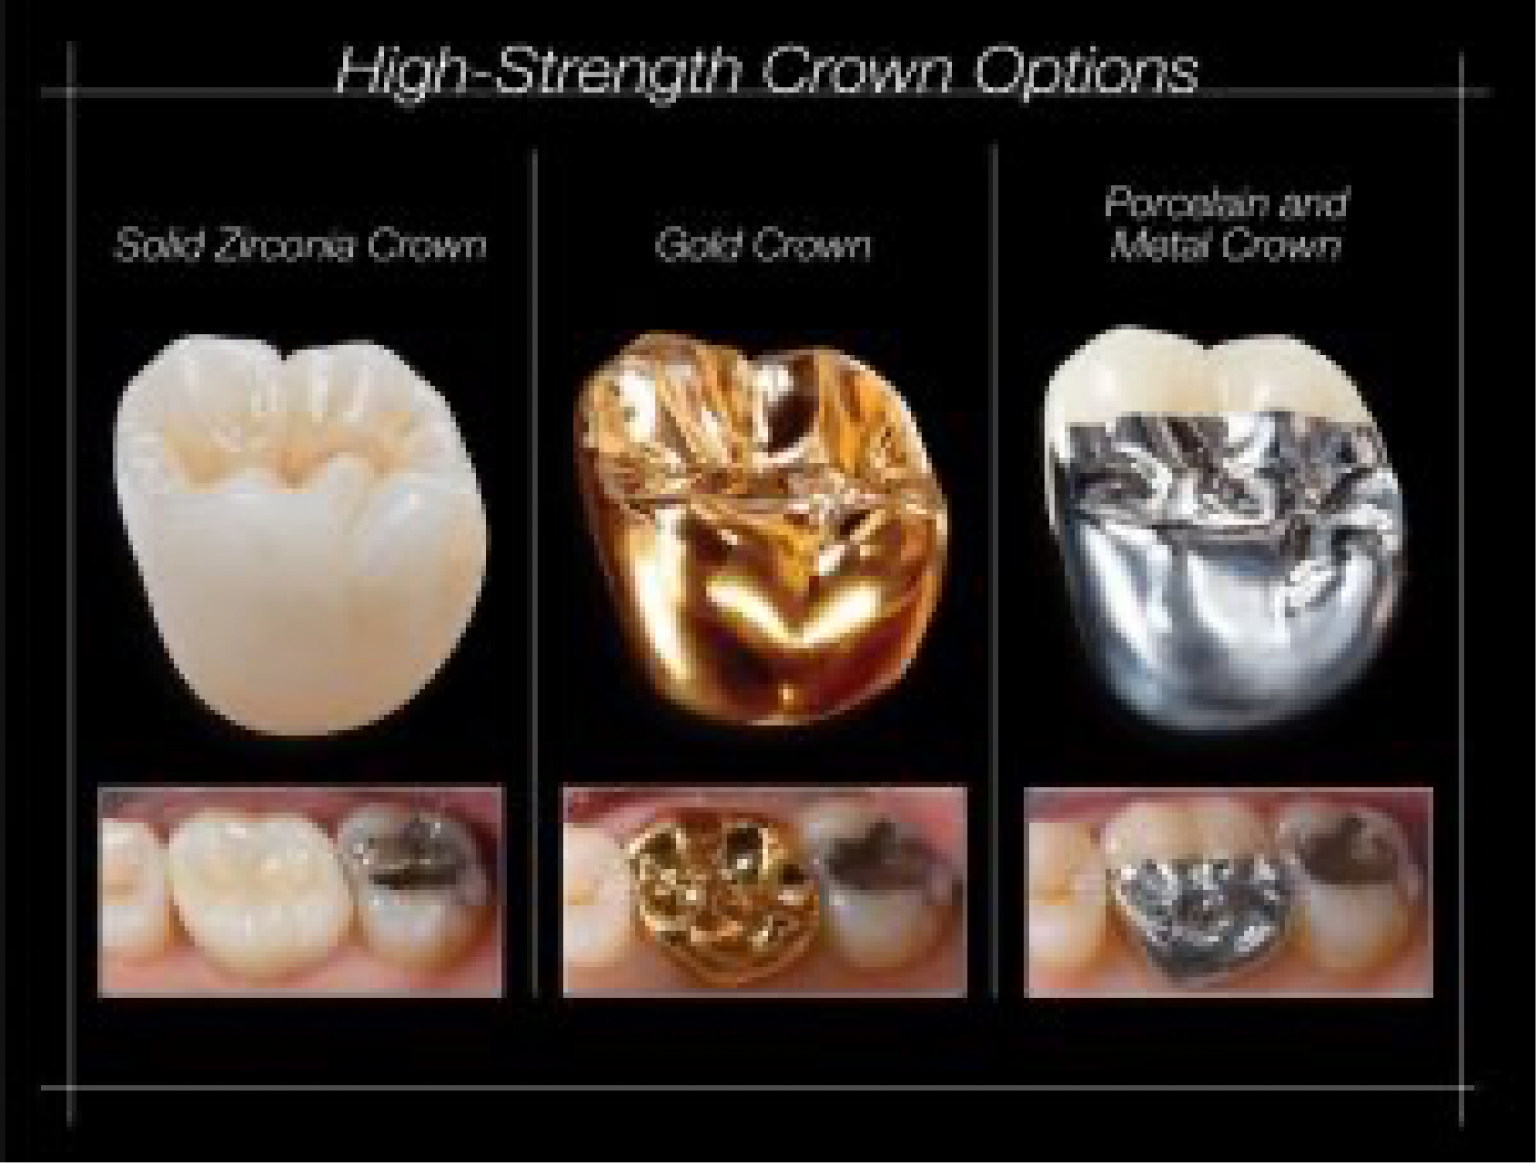 Dental Crowns Bushy Park Dental Practice